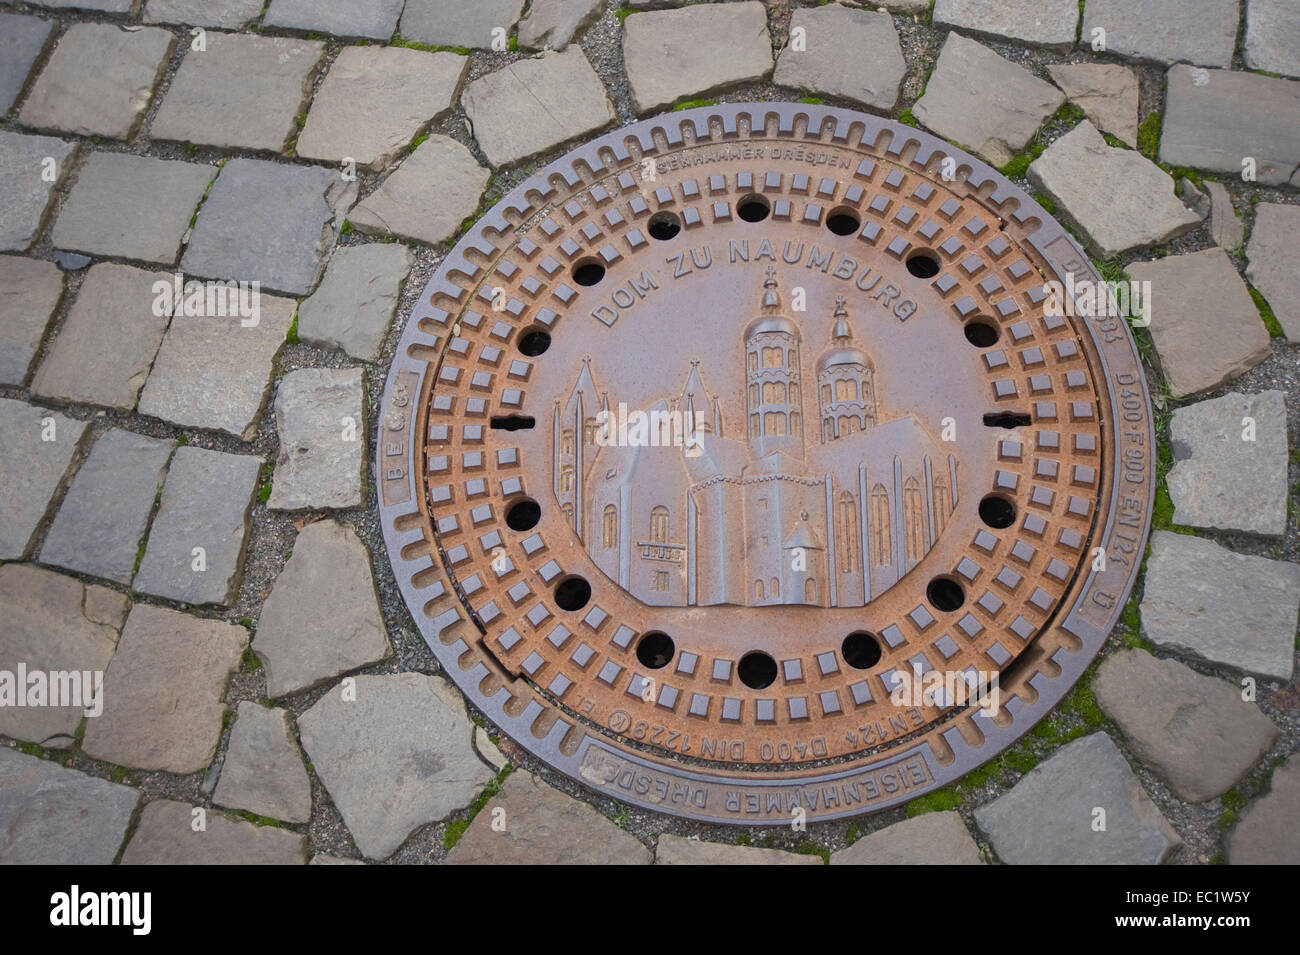 Naumburg Cathedral on a manhole cover, Naumburg, Saxony-Anhalt, Germany Stock Photo